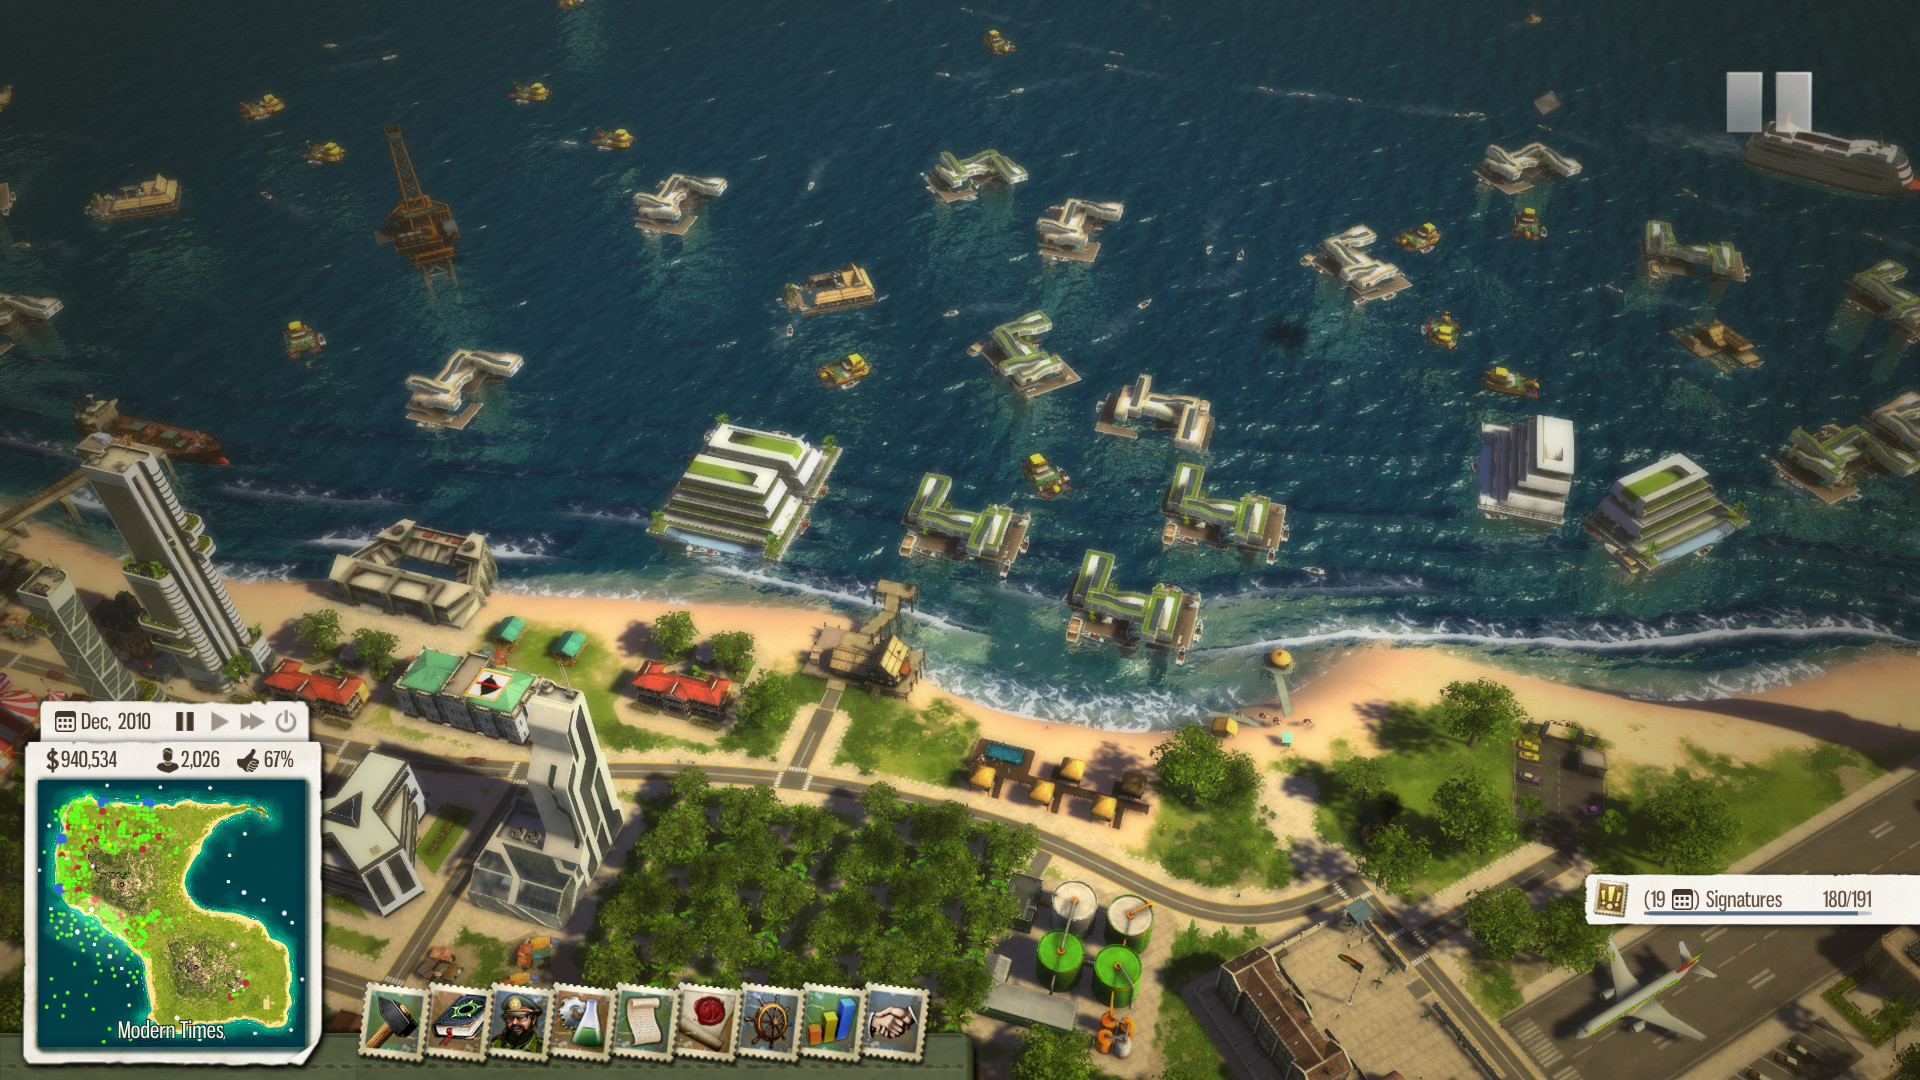 Tropico 5 - Mad World on Steam